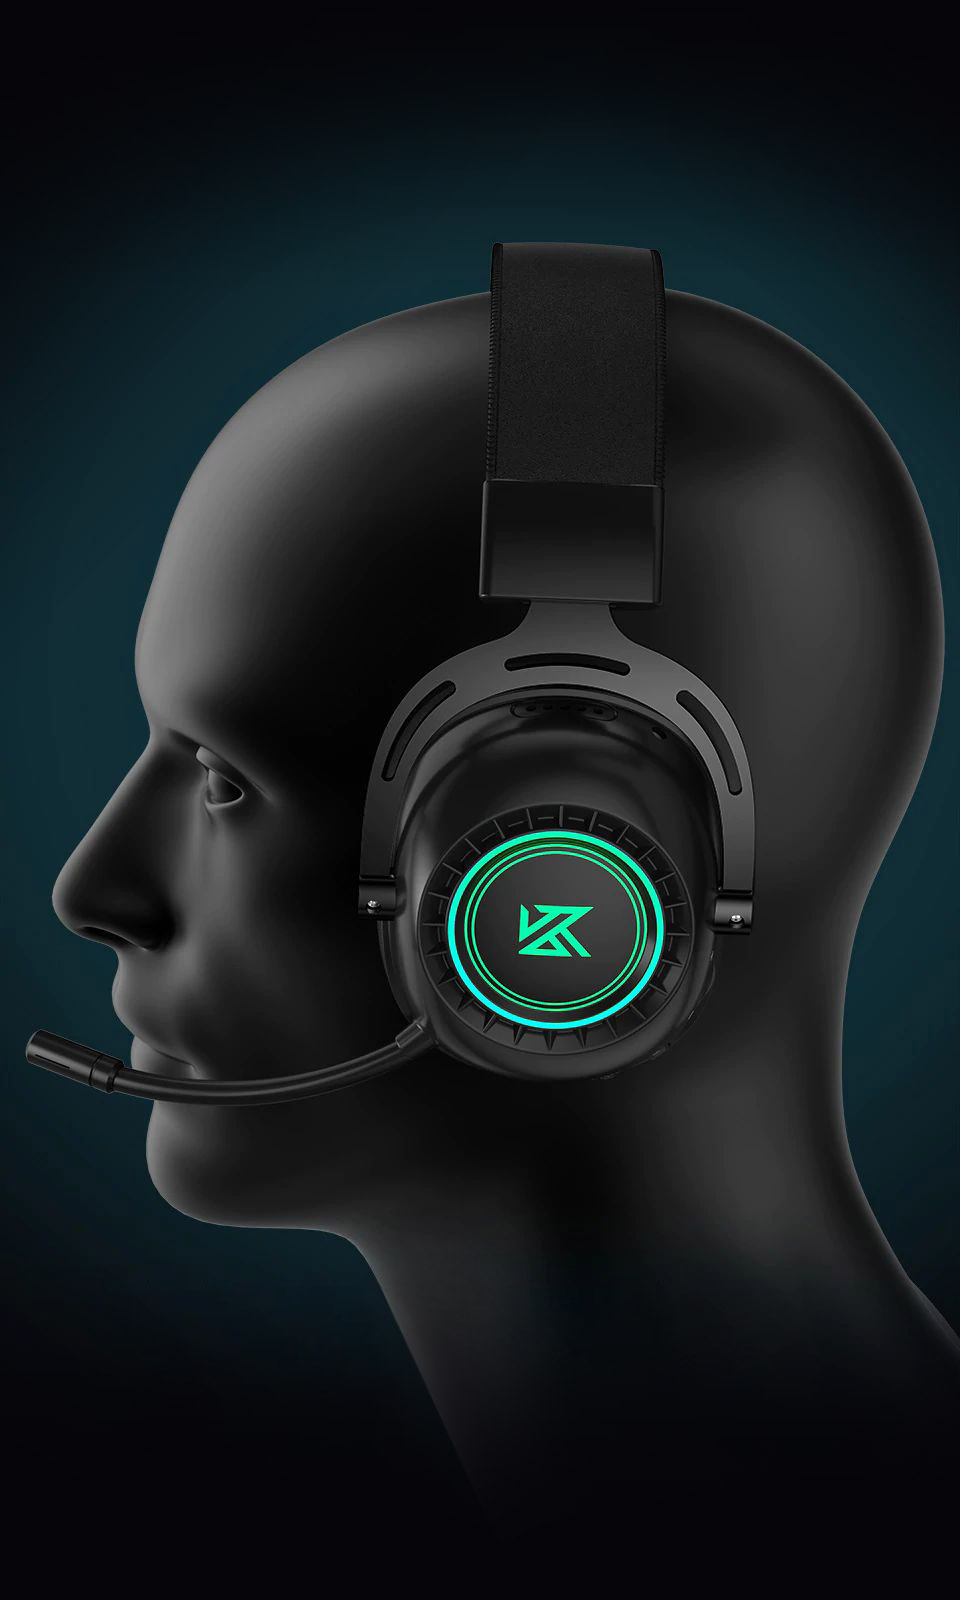 KZ GP20 headphones on a head